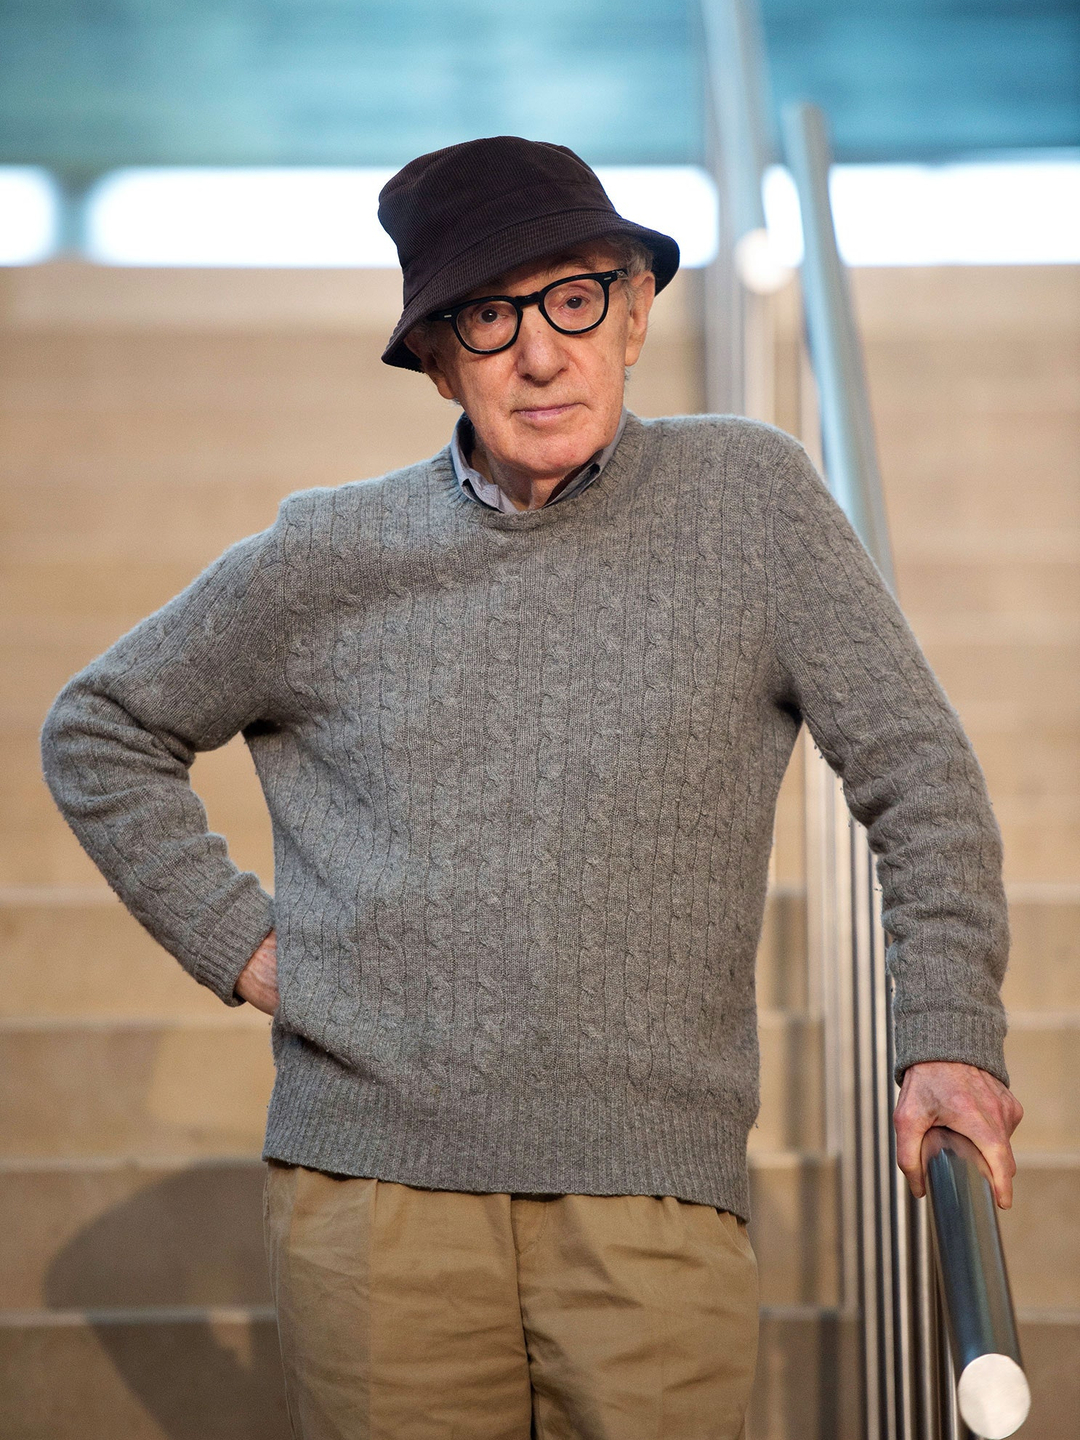 Woody Allen dating history